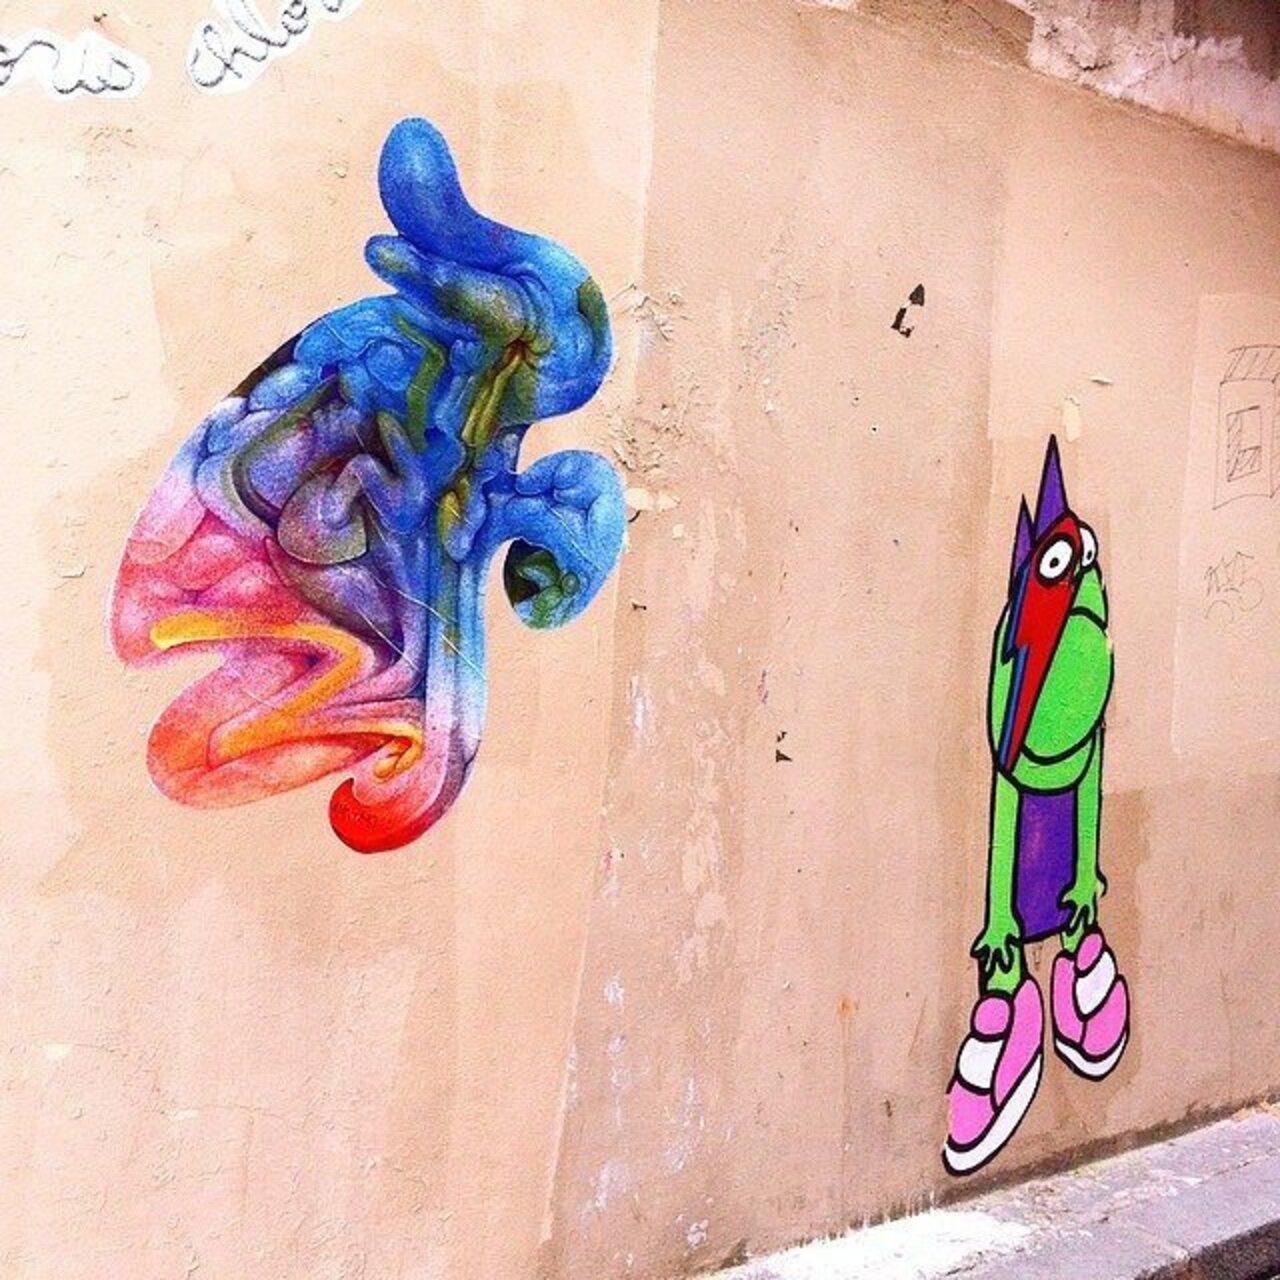 #streetart #streetarteverywhere #streetshot #graffitiart #graffiti #arturbain #urbanart  #mur #mural #wall #wallart… https://t.co/kj1ZkumVj7